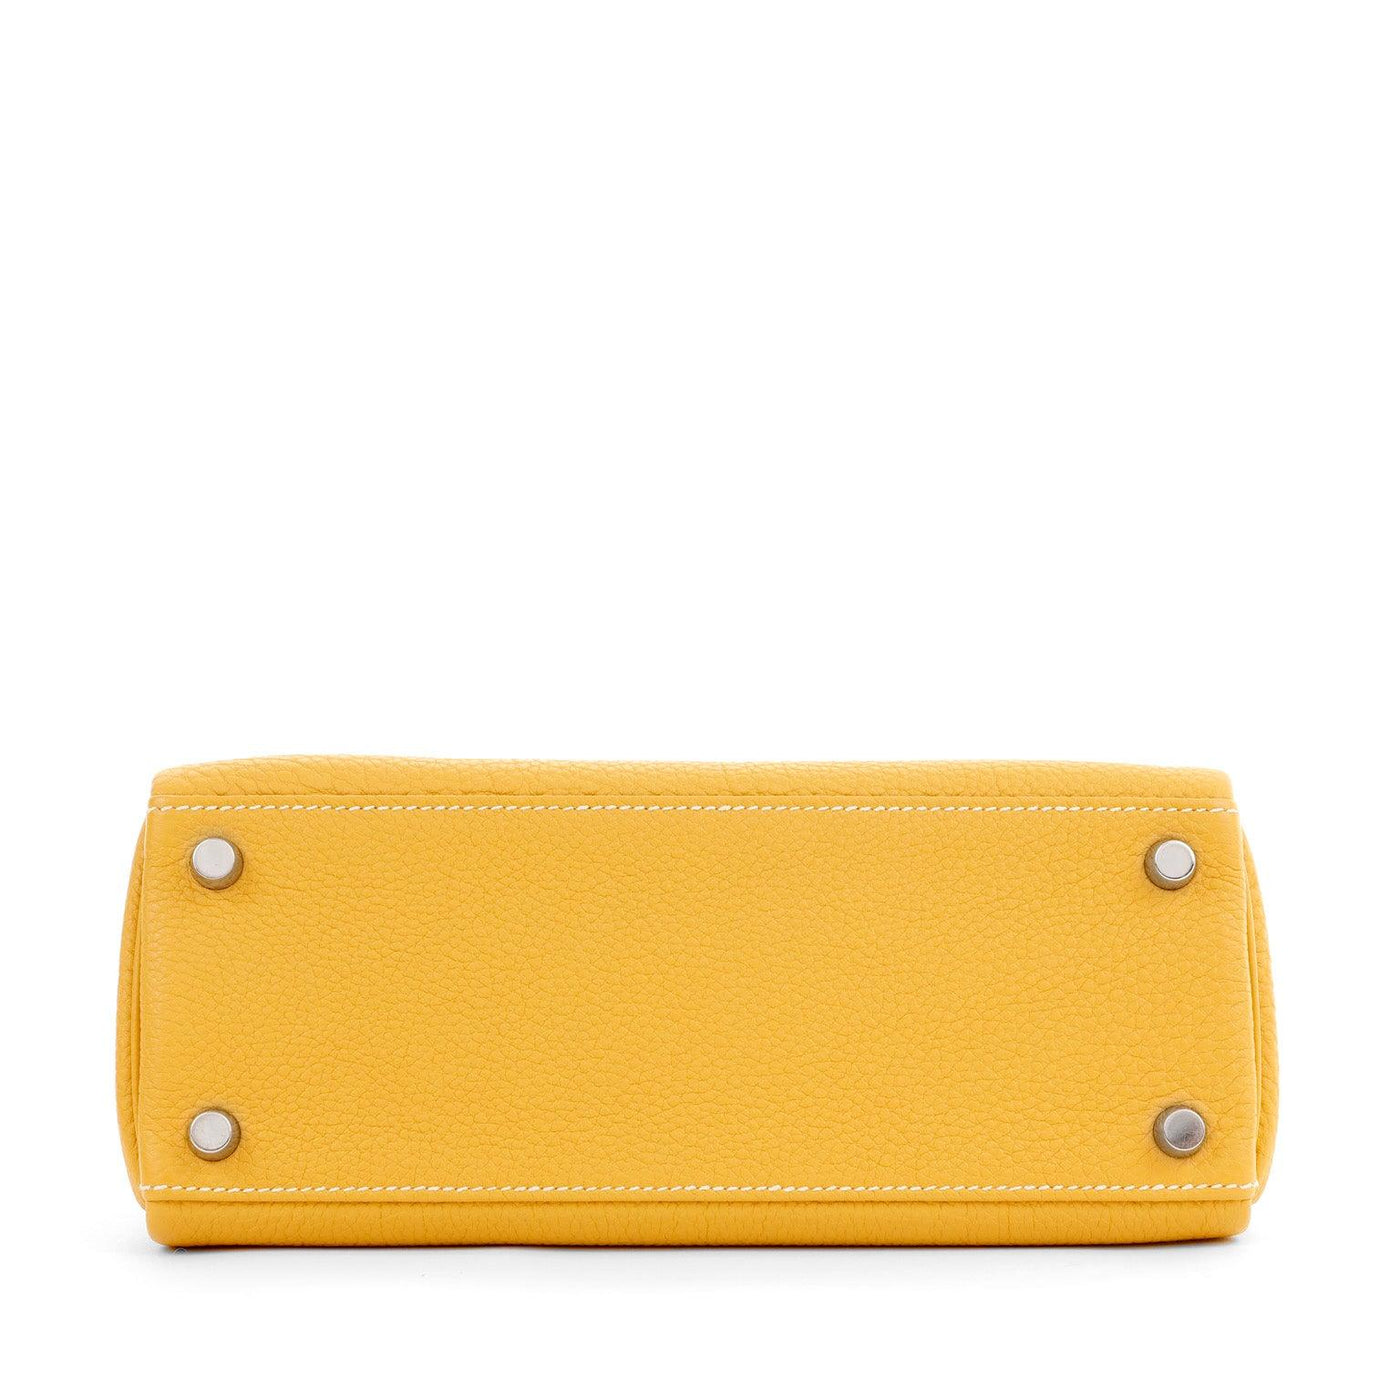 Hermès 25cm Mustard Yellow Togo Kelly Palladium Hardware - Only Authentics